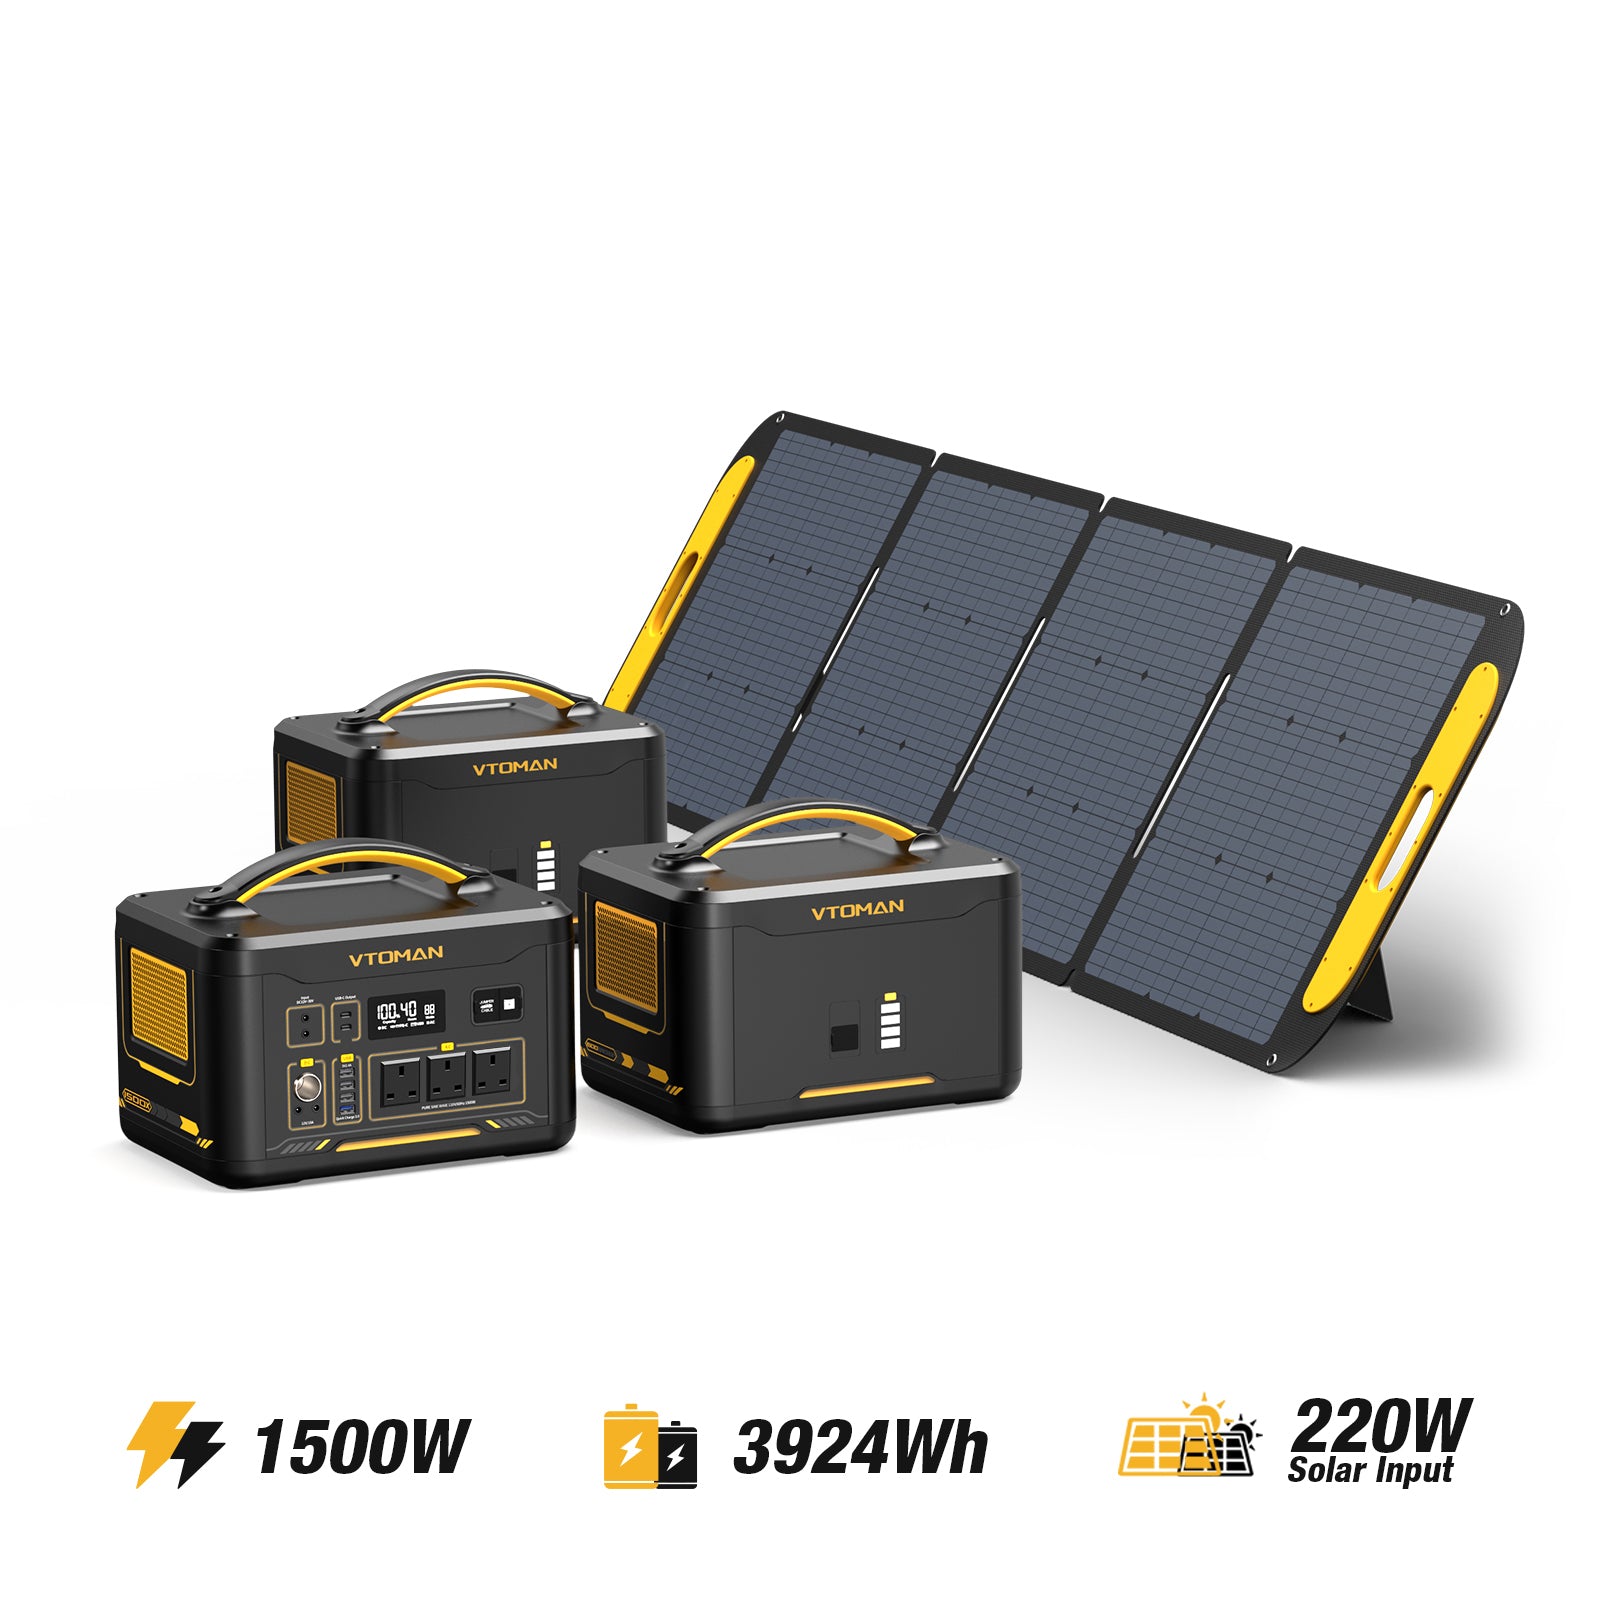 Jump 1500W/3924Wh 220W Solar Generator